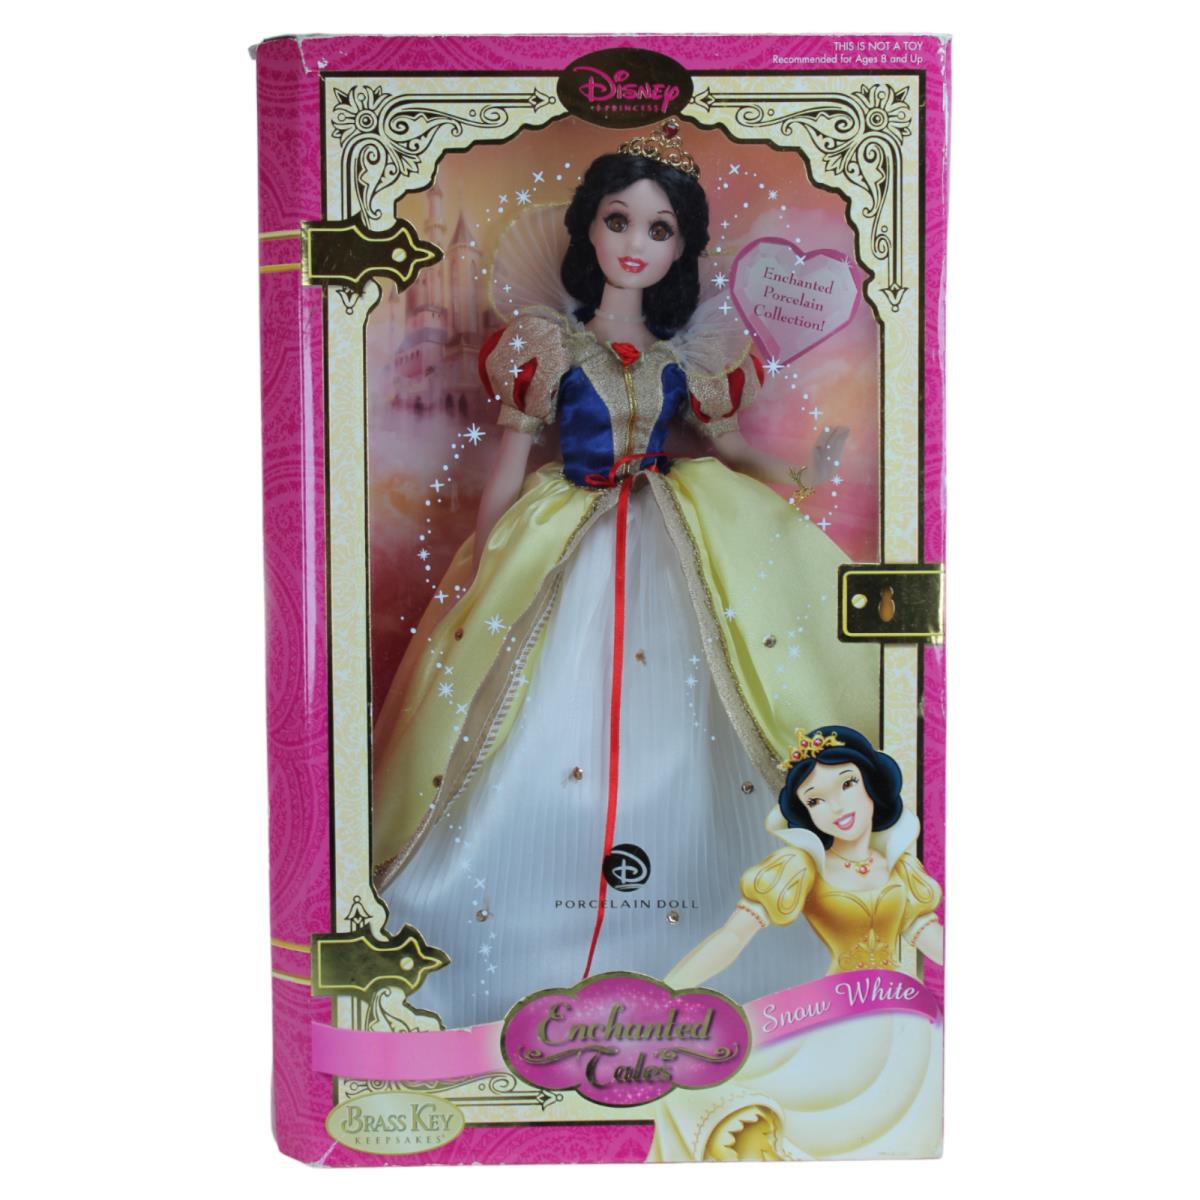 Disney Princess Enchanted Tales Snow White Porcelain Doll 2007 - Doll Hair: Black, Doll Eye: Brown